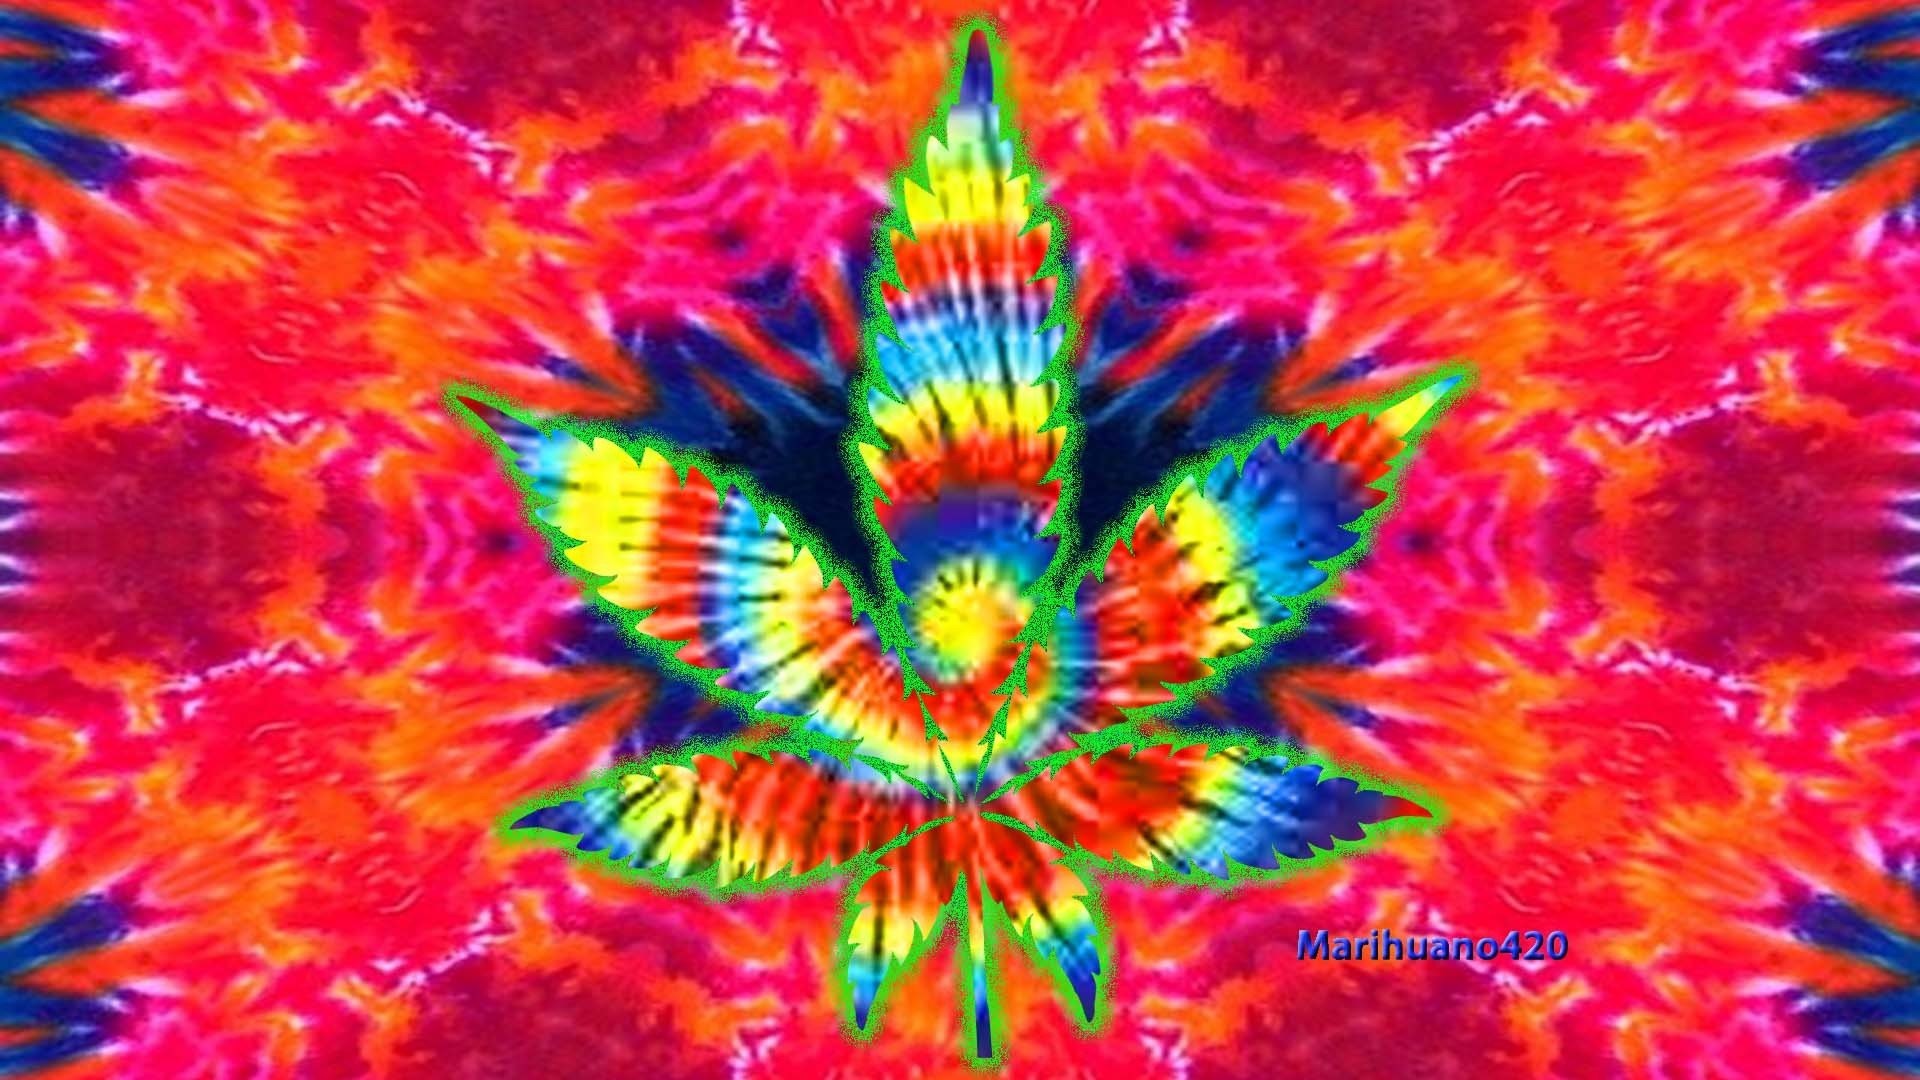 Marijuana weed 420 drugs poster wallpaper